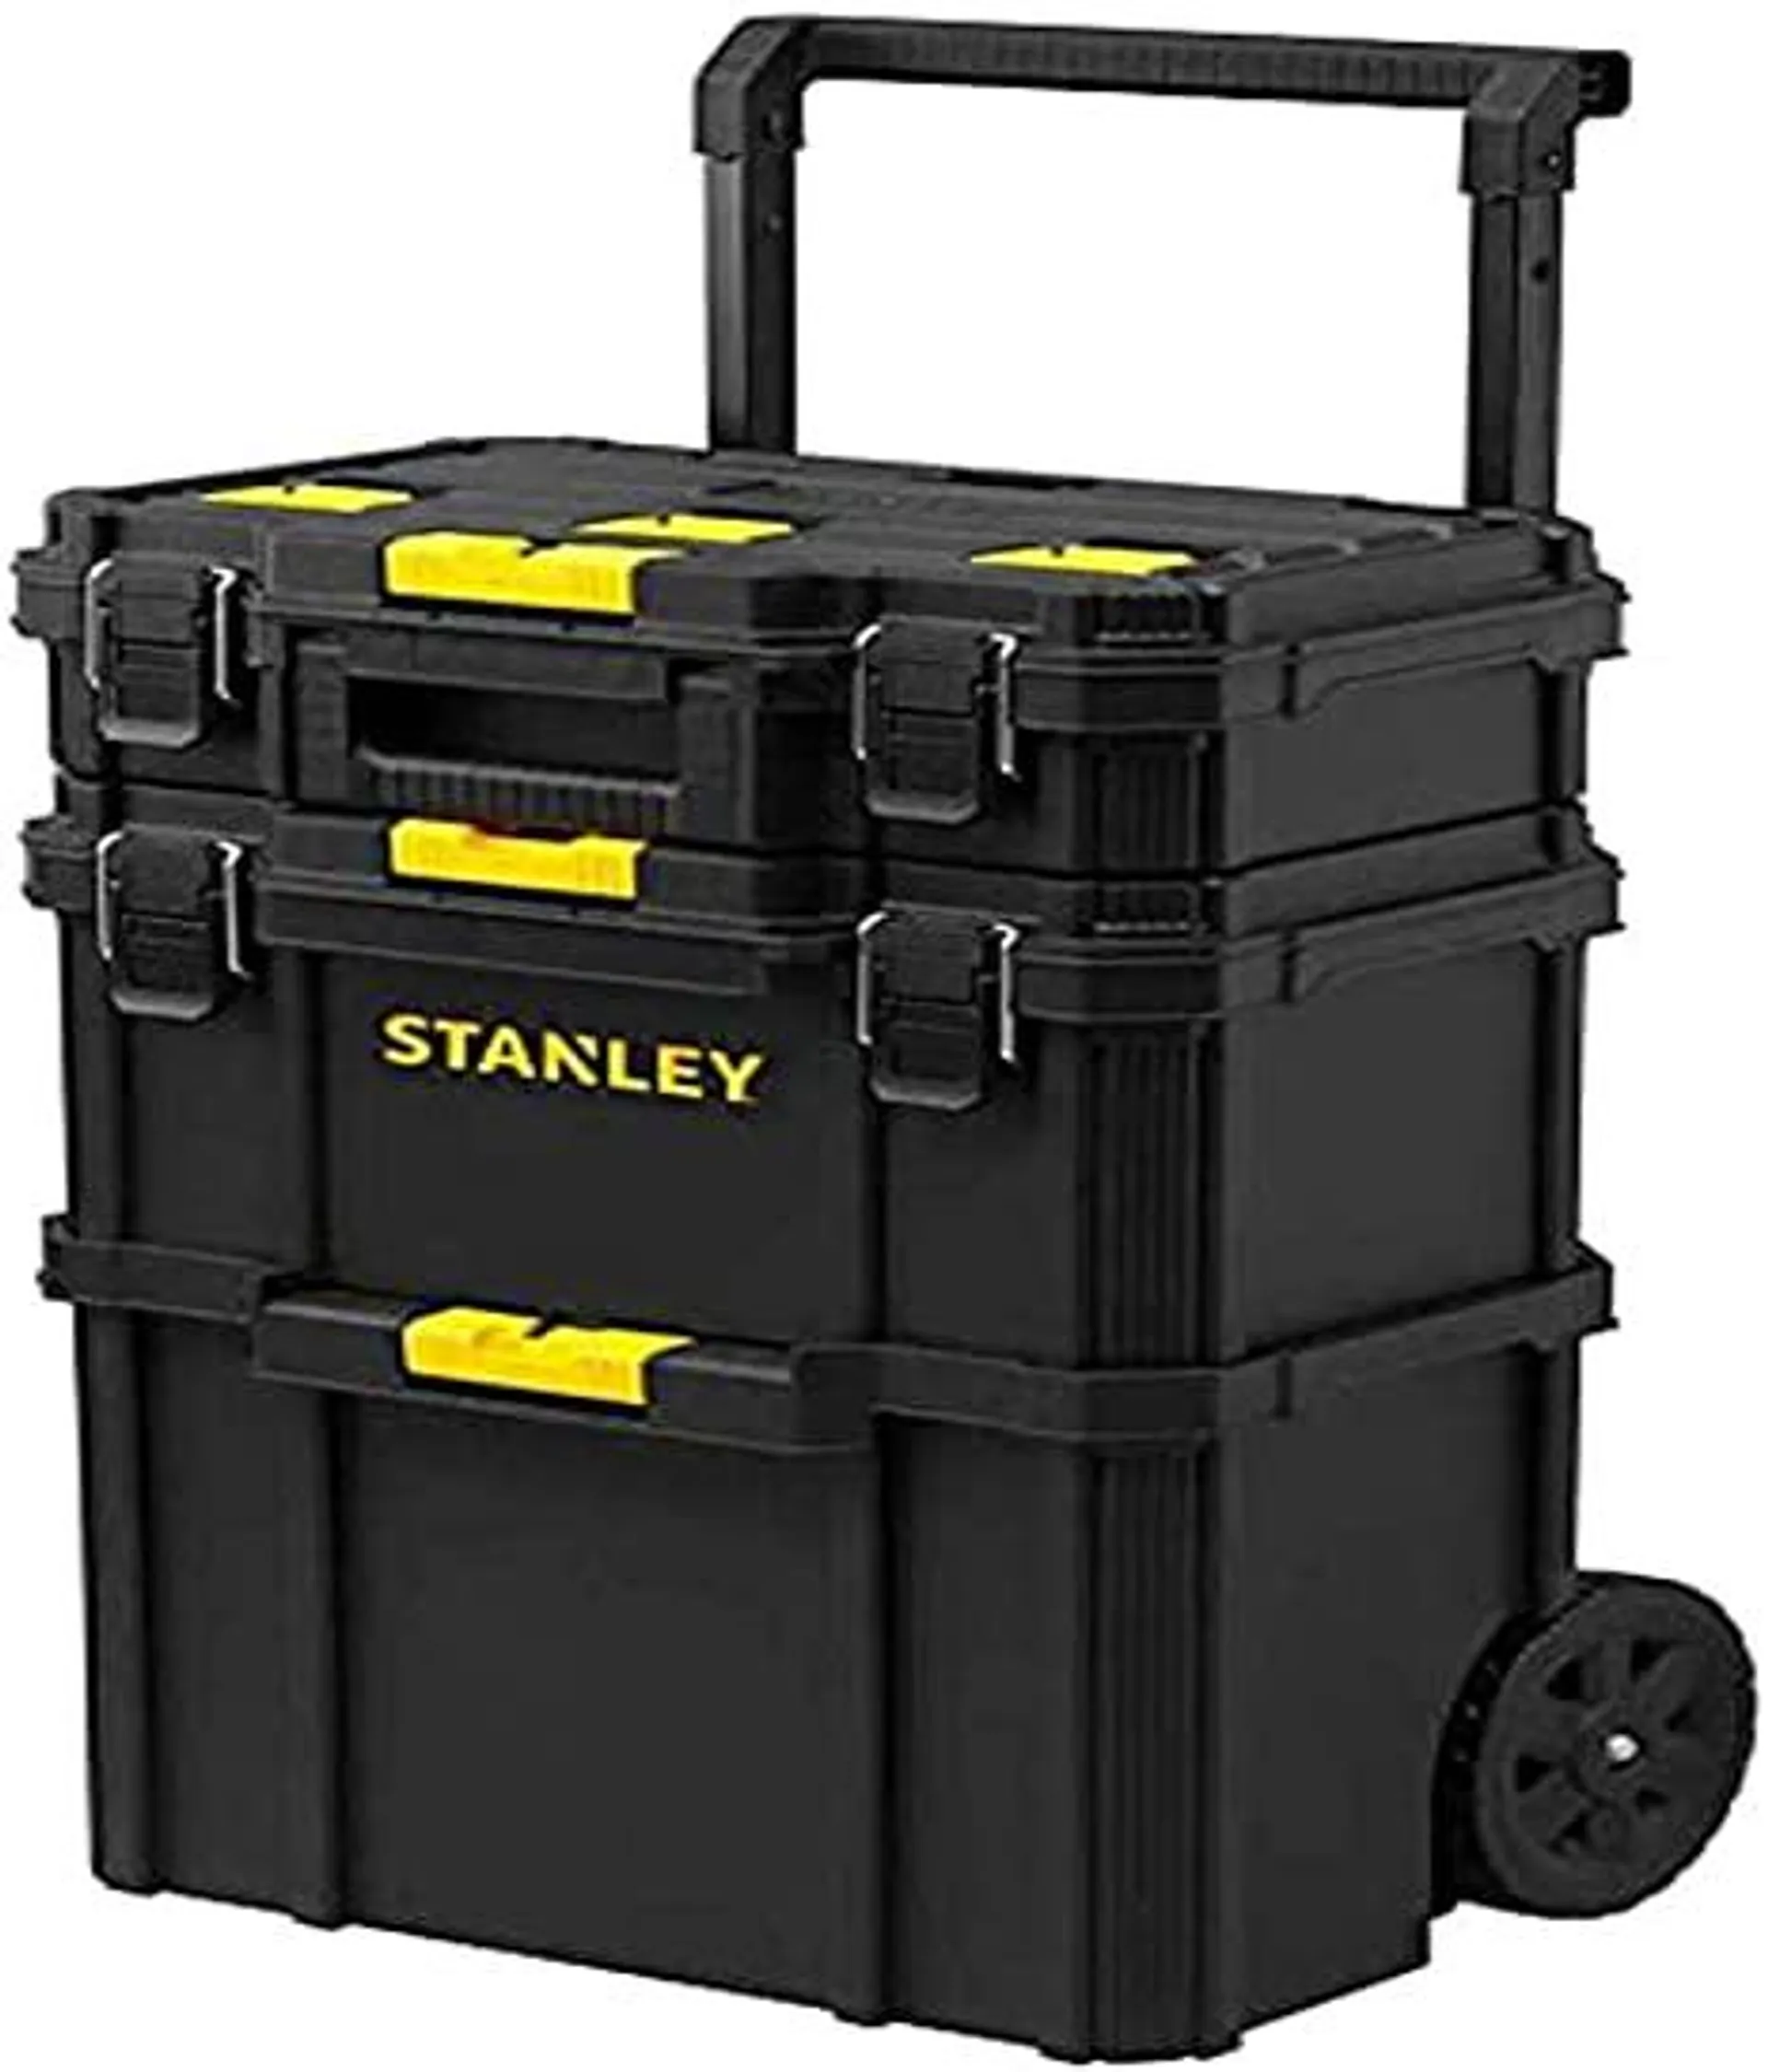 STANLEY® TOOL BOX, MODULAR ROLLING, QuickLink Rolling Workshop